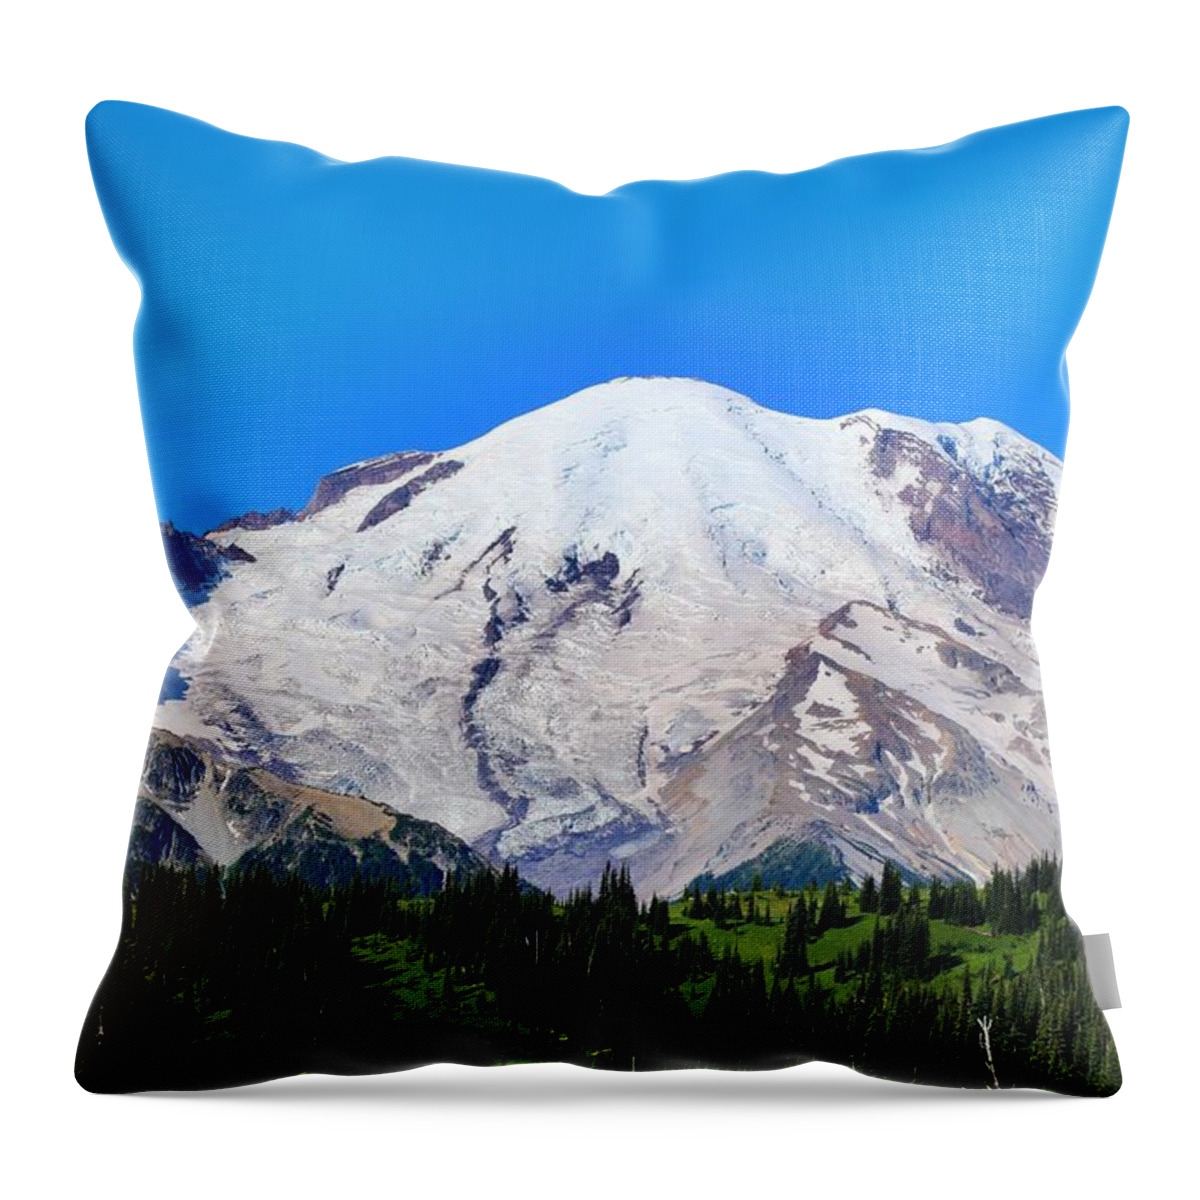 Mount Rainier Throw Pillow featuring the photograph Up close by Lynn Hopwood